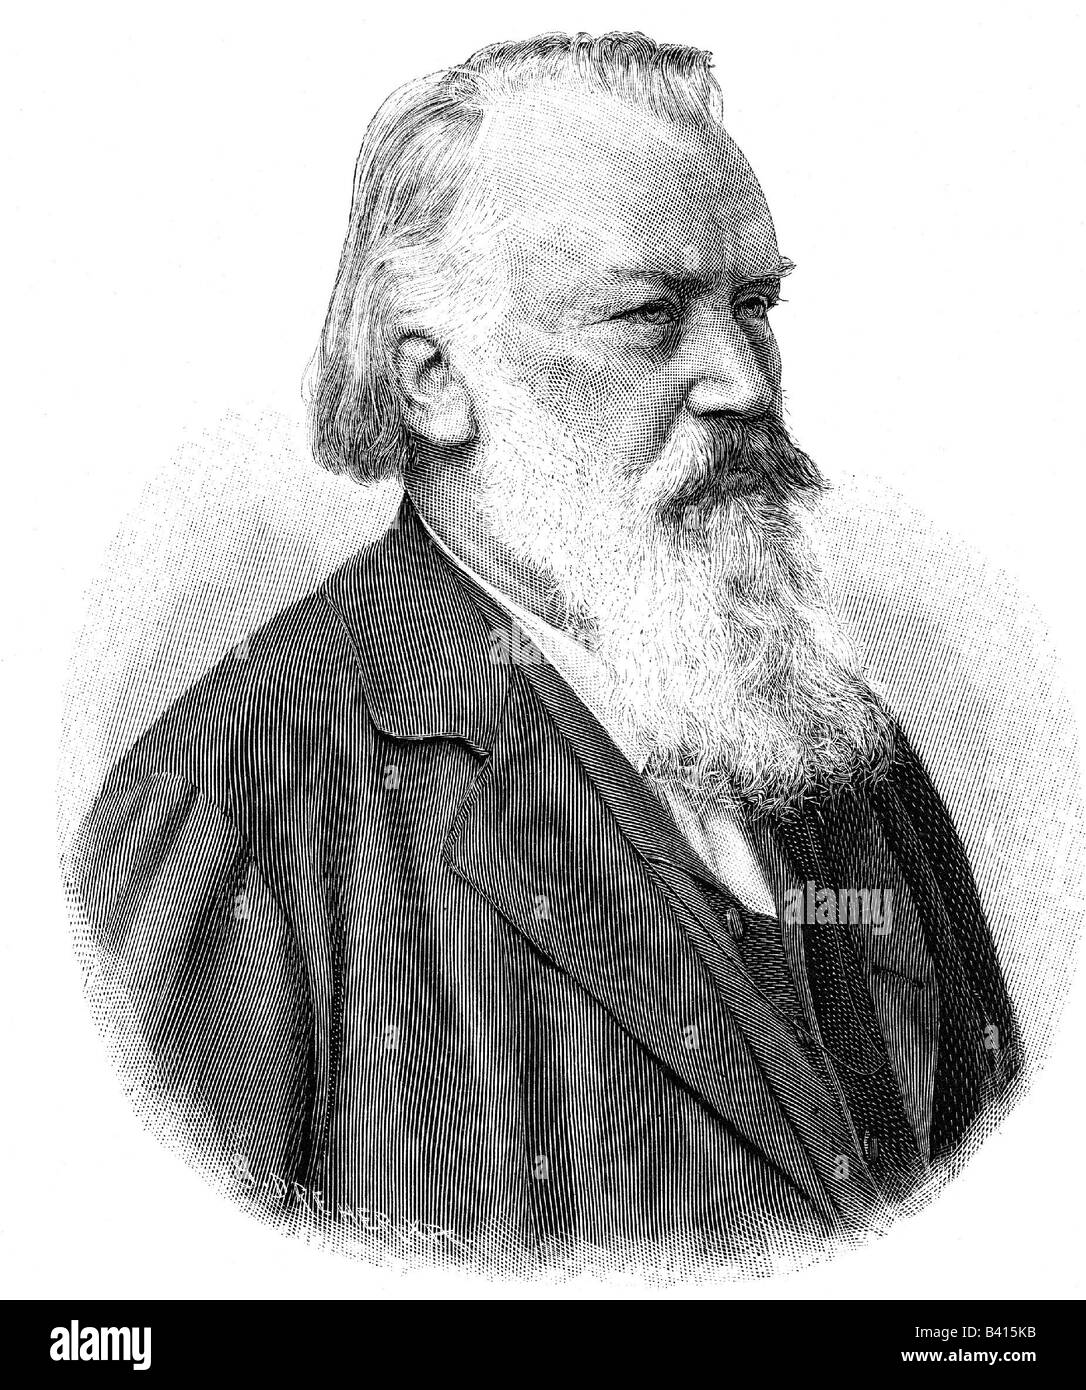 Brahms, Johannes, 7.5.1833 - 3.4.1897, German composer, half length, original wood engraving, 19th century, after photo by R. Krziwanek, Stock Photo